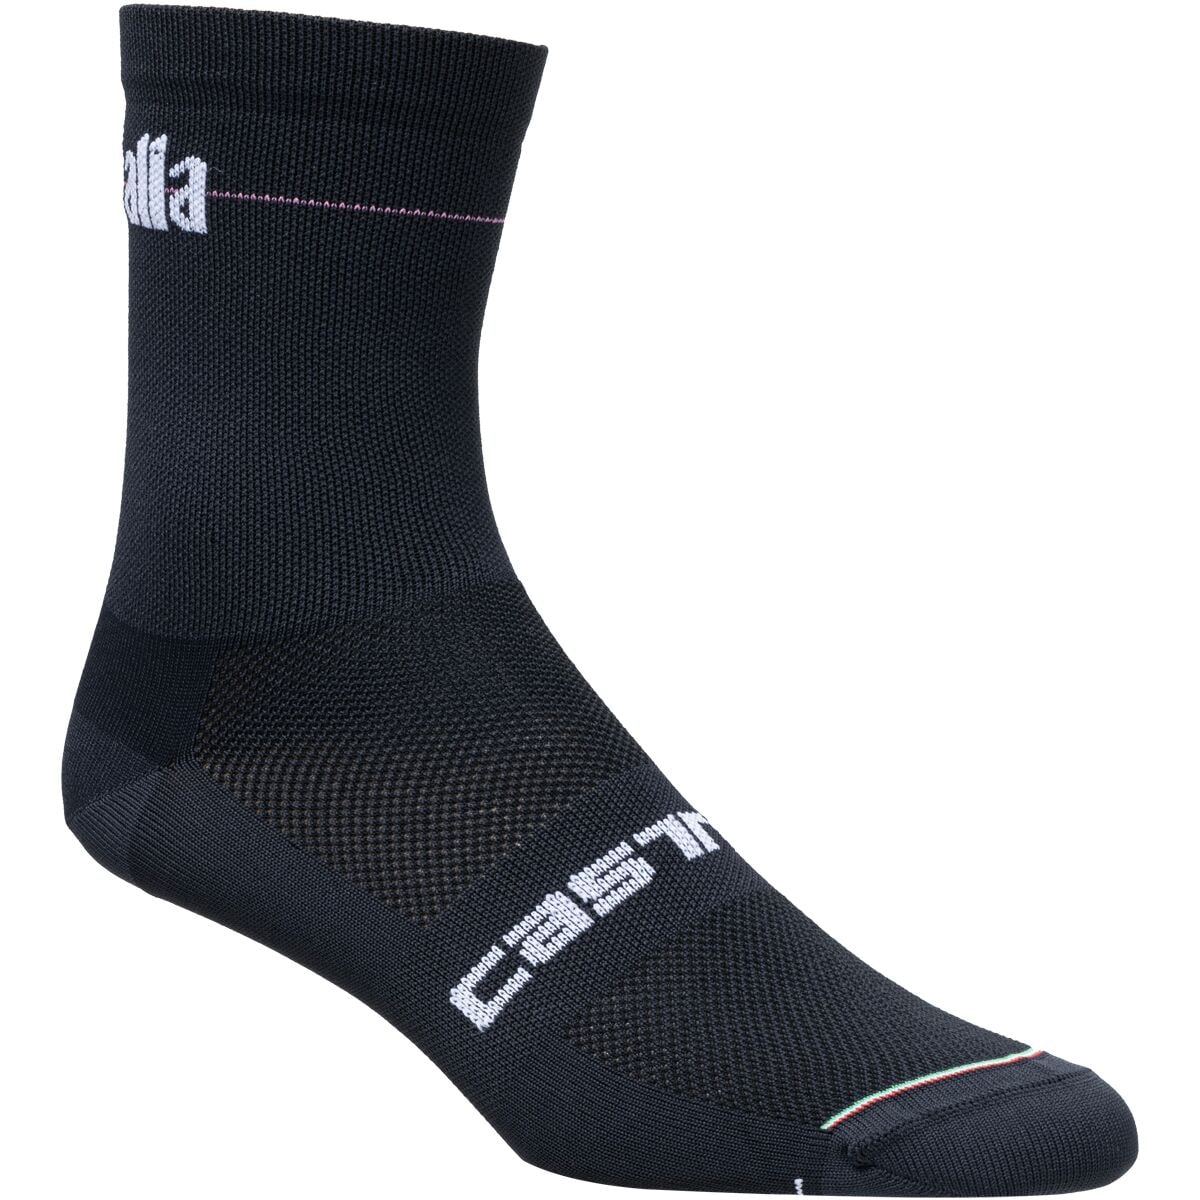 Castelli Giro 13 Sock Nero, S/M - Men's